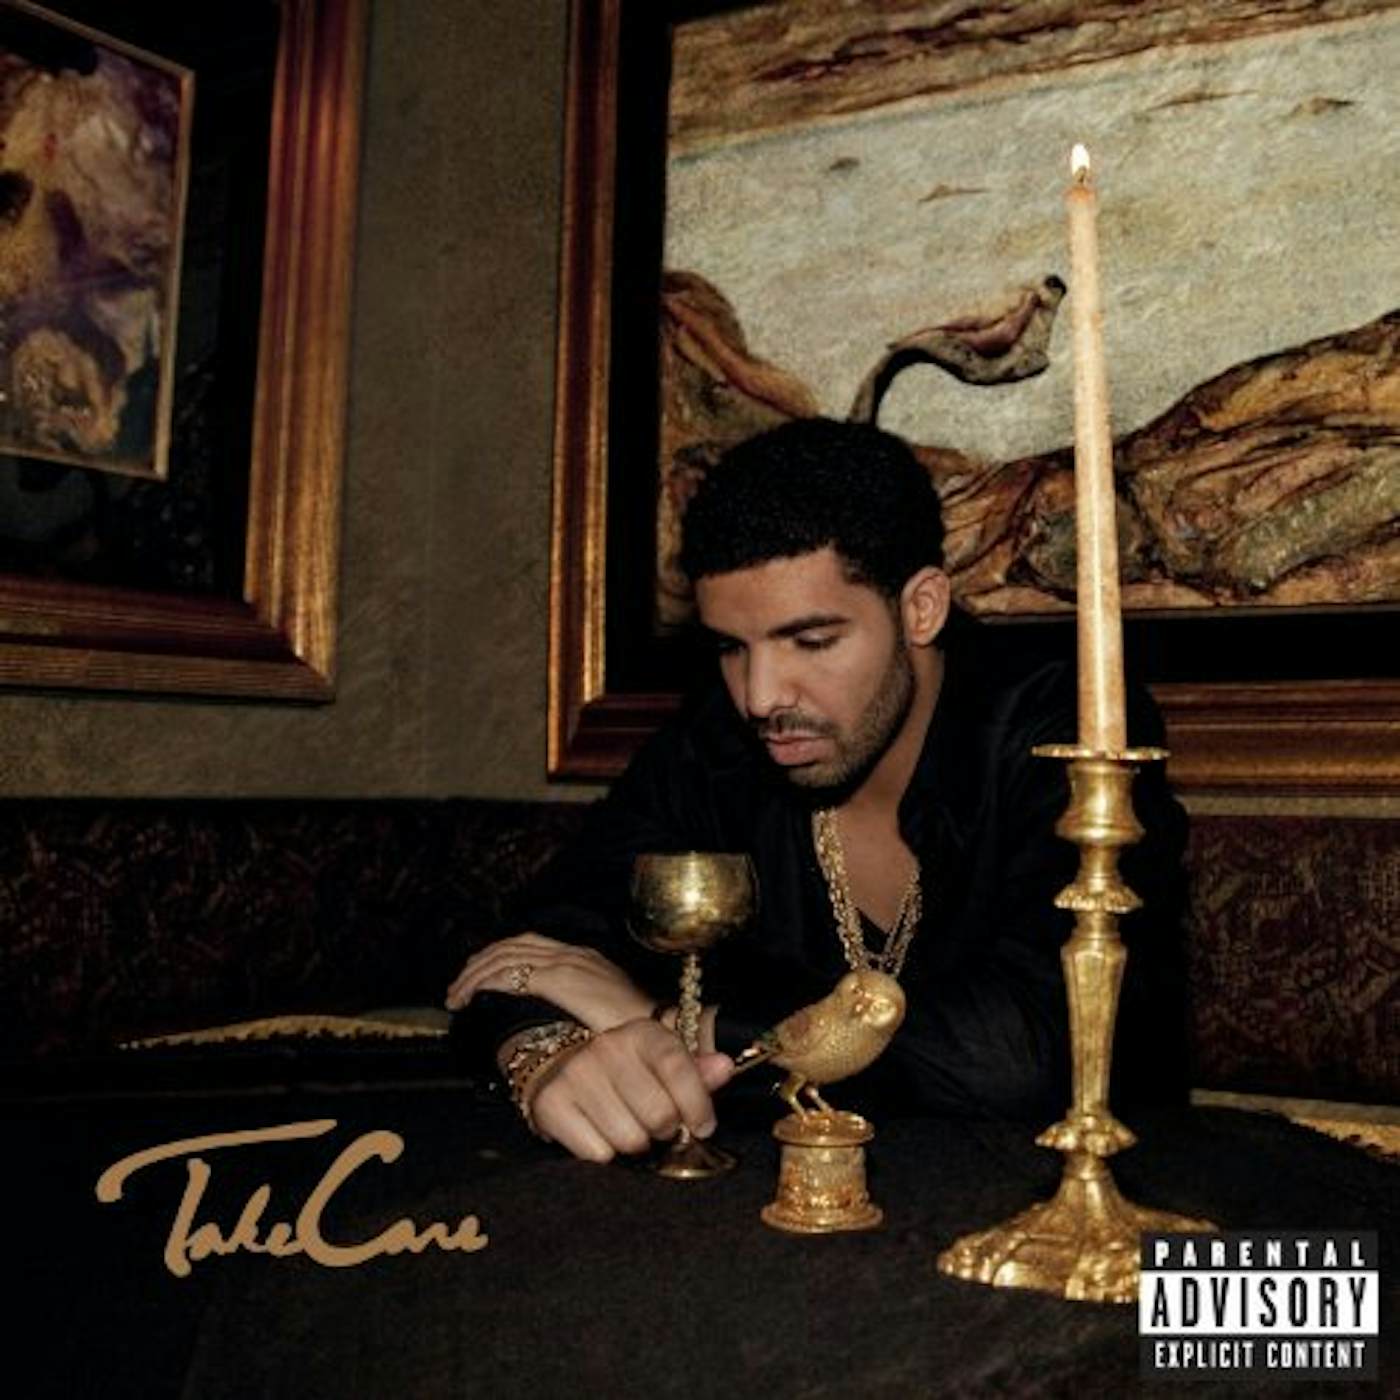 Drake Take Care Vinyl Record